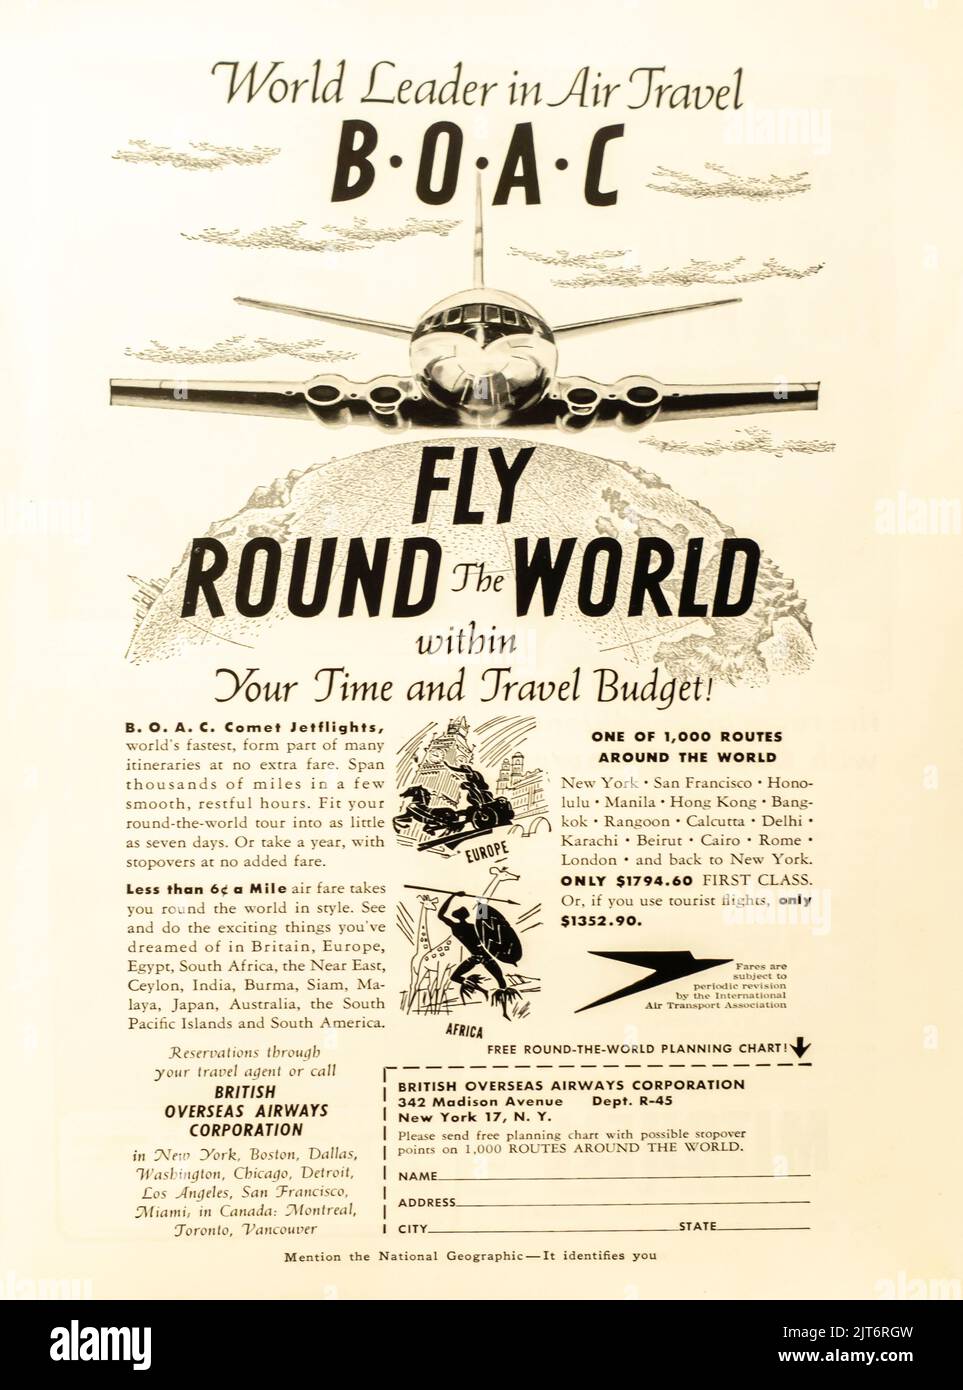 British overseas airways corporation advertisement placed inside NatGeo magazine, 1954 Stock Photo